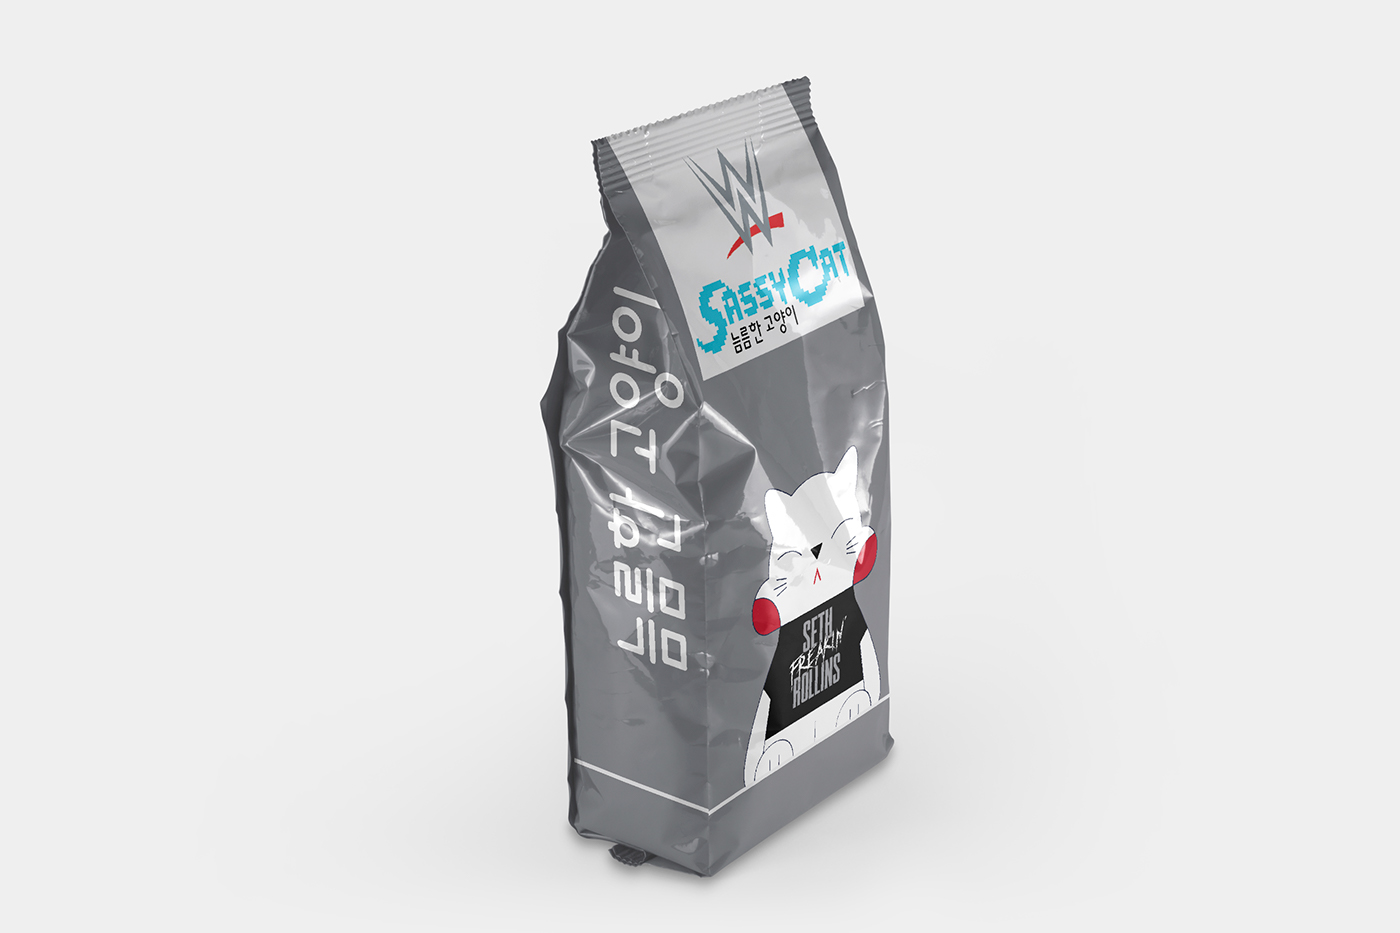 sassy cat Cat toy art design Packaging WWE drive biker mice 3D